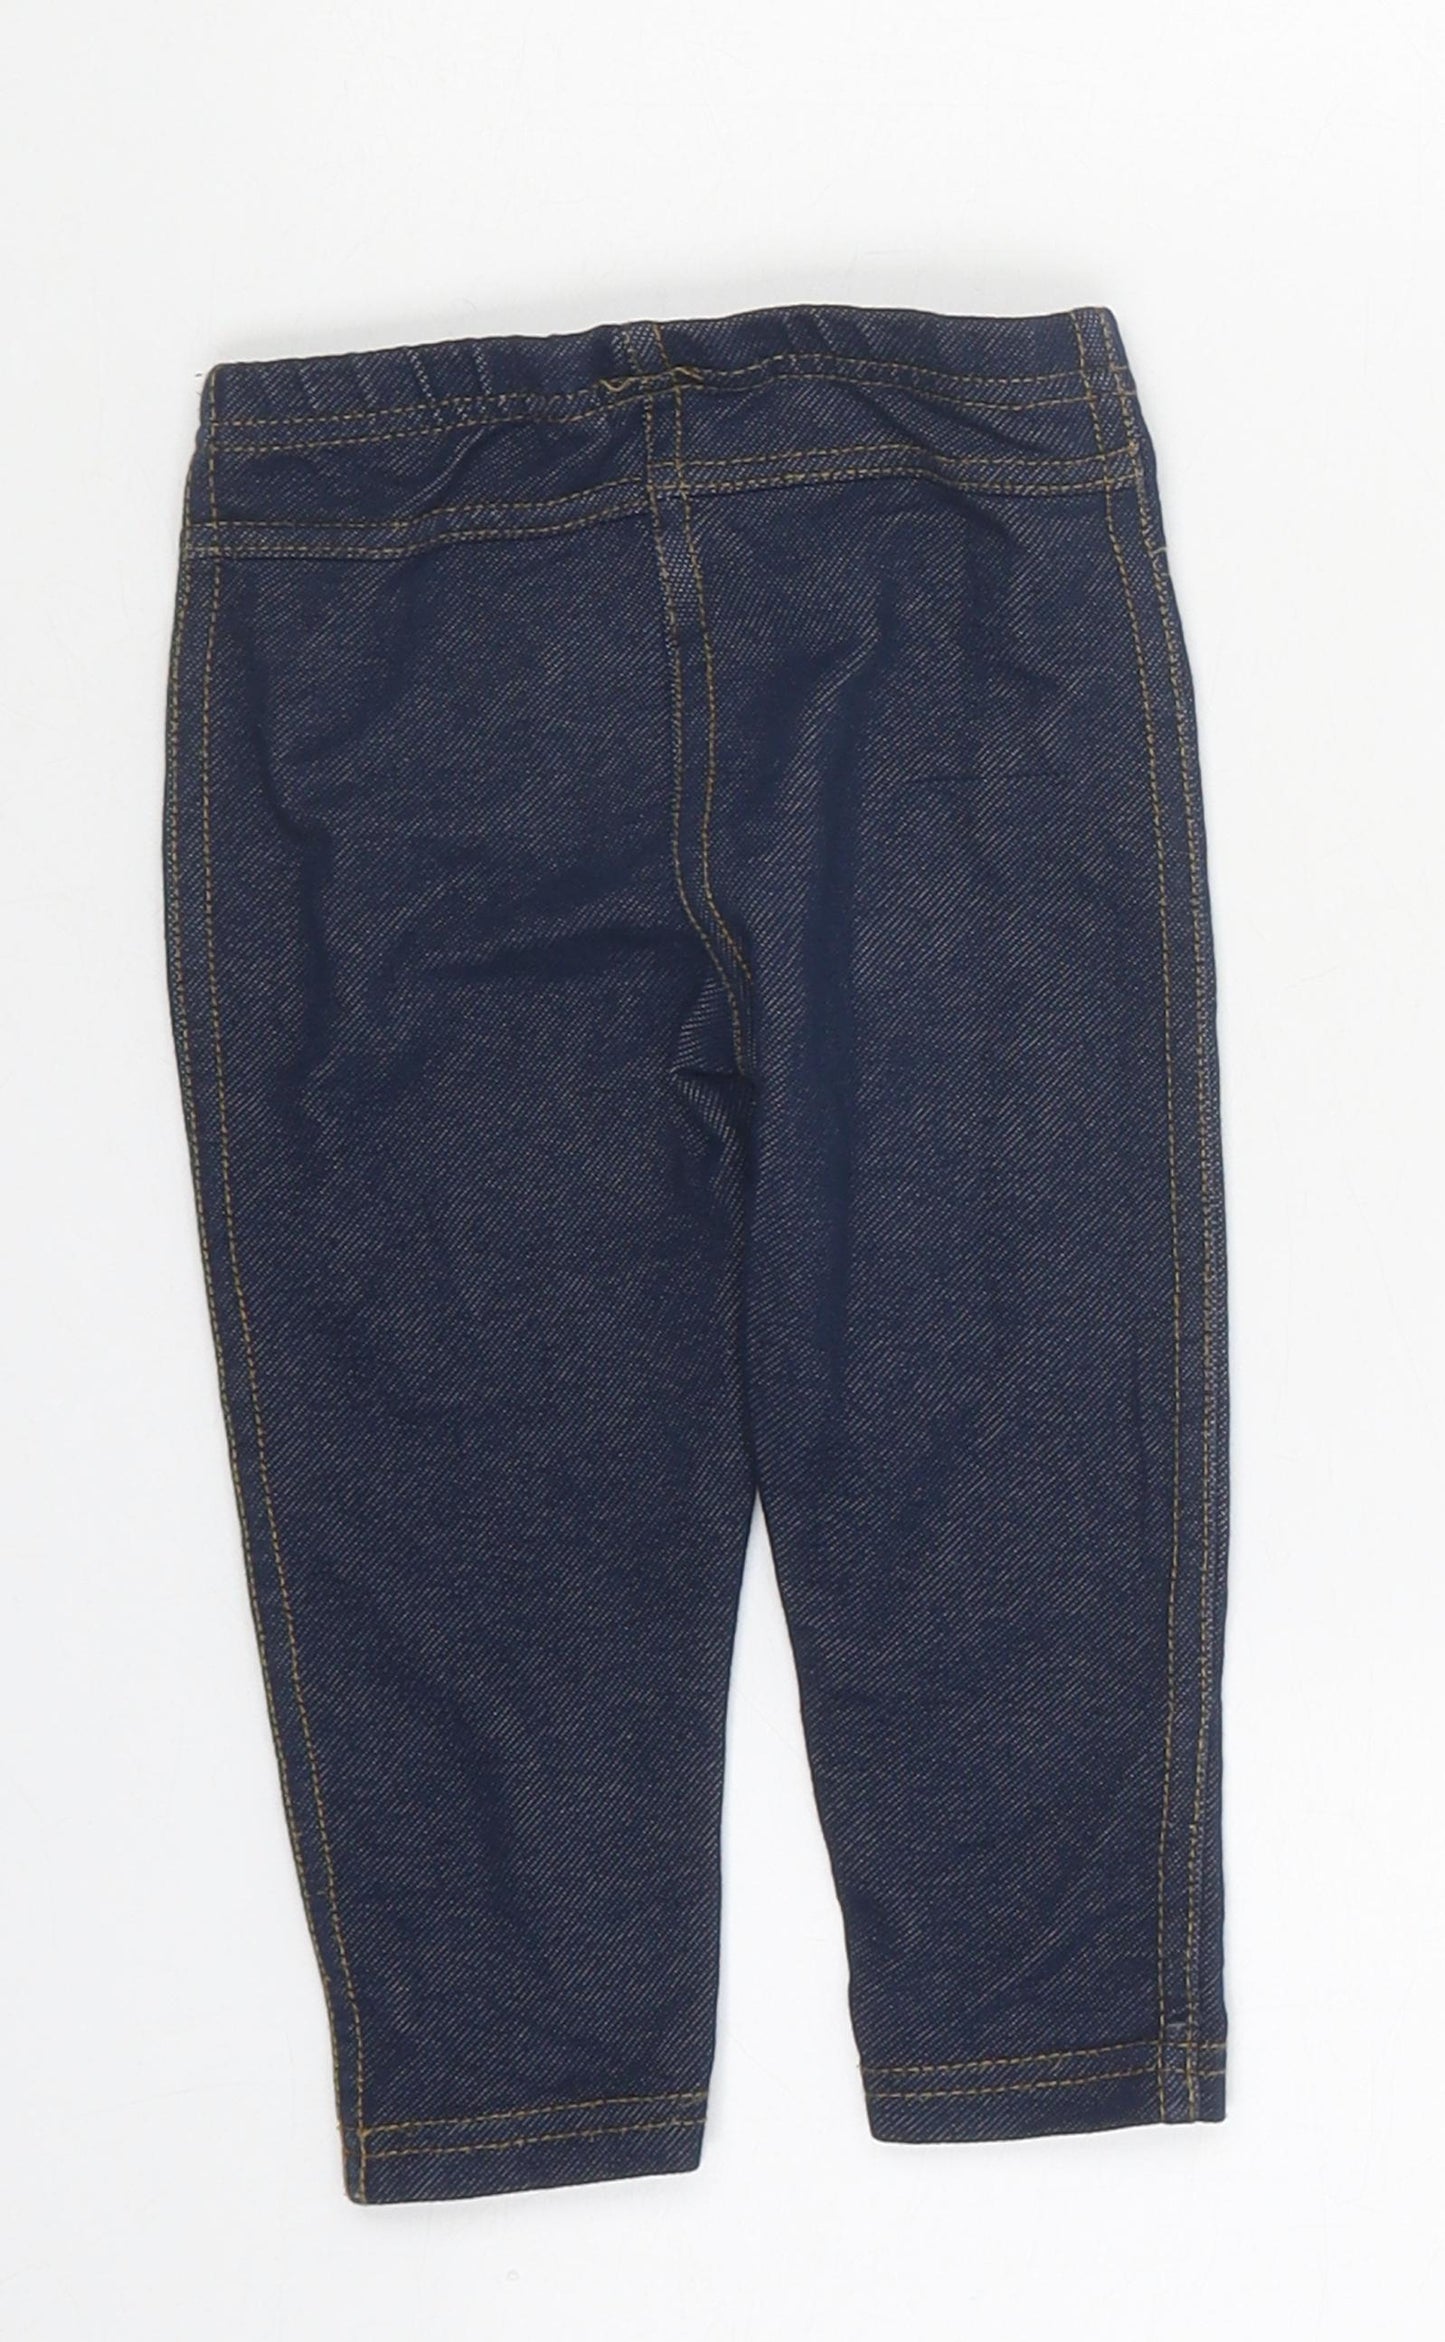 Primark Girls Blue 100% Cotton Jegging Jeans Size 9-10 Years Regular Pullover